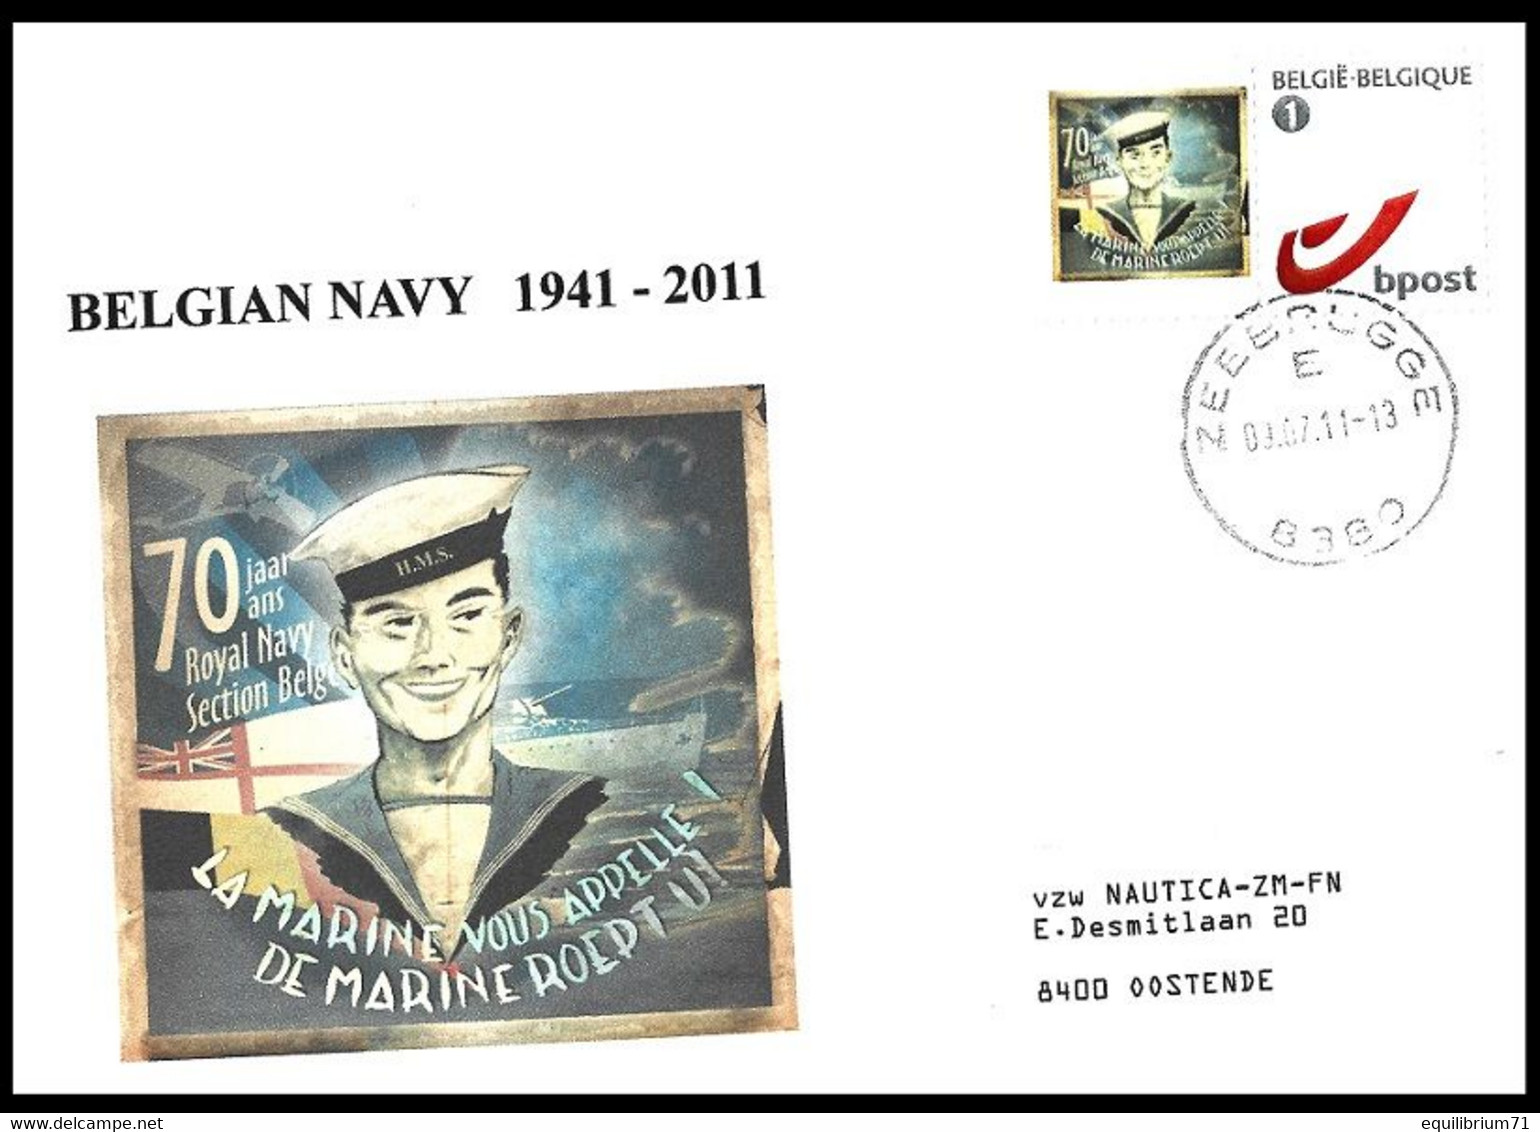 DUOSTAMP ° / MYSTAMP° - Enveloppe Souvenir / Herdenkingsomslag - BELGIAN Navy - 1941-2011 - 09-07-2011 - Briefe U. Dokumente